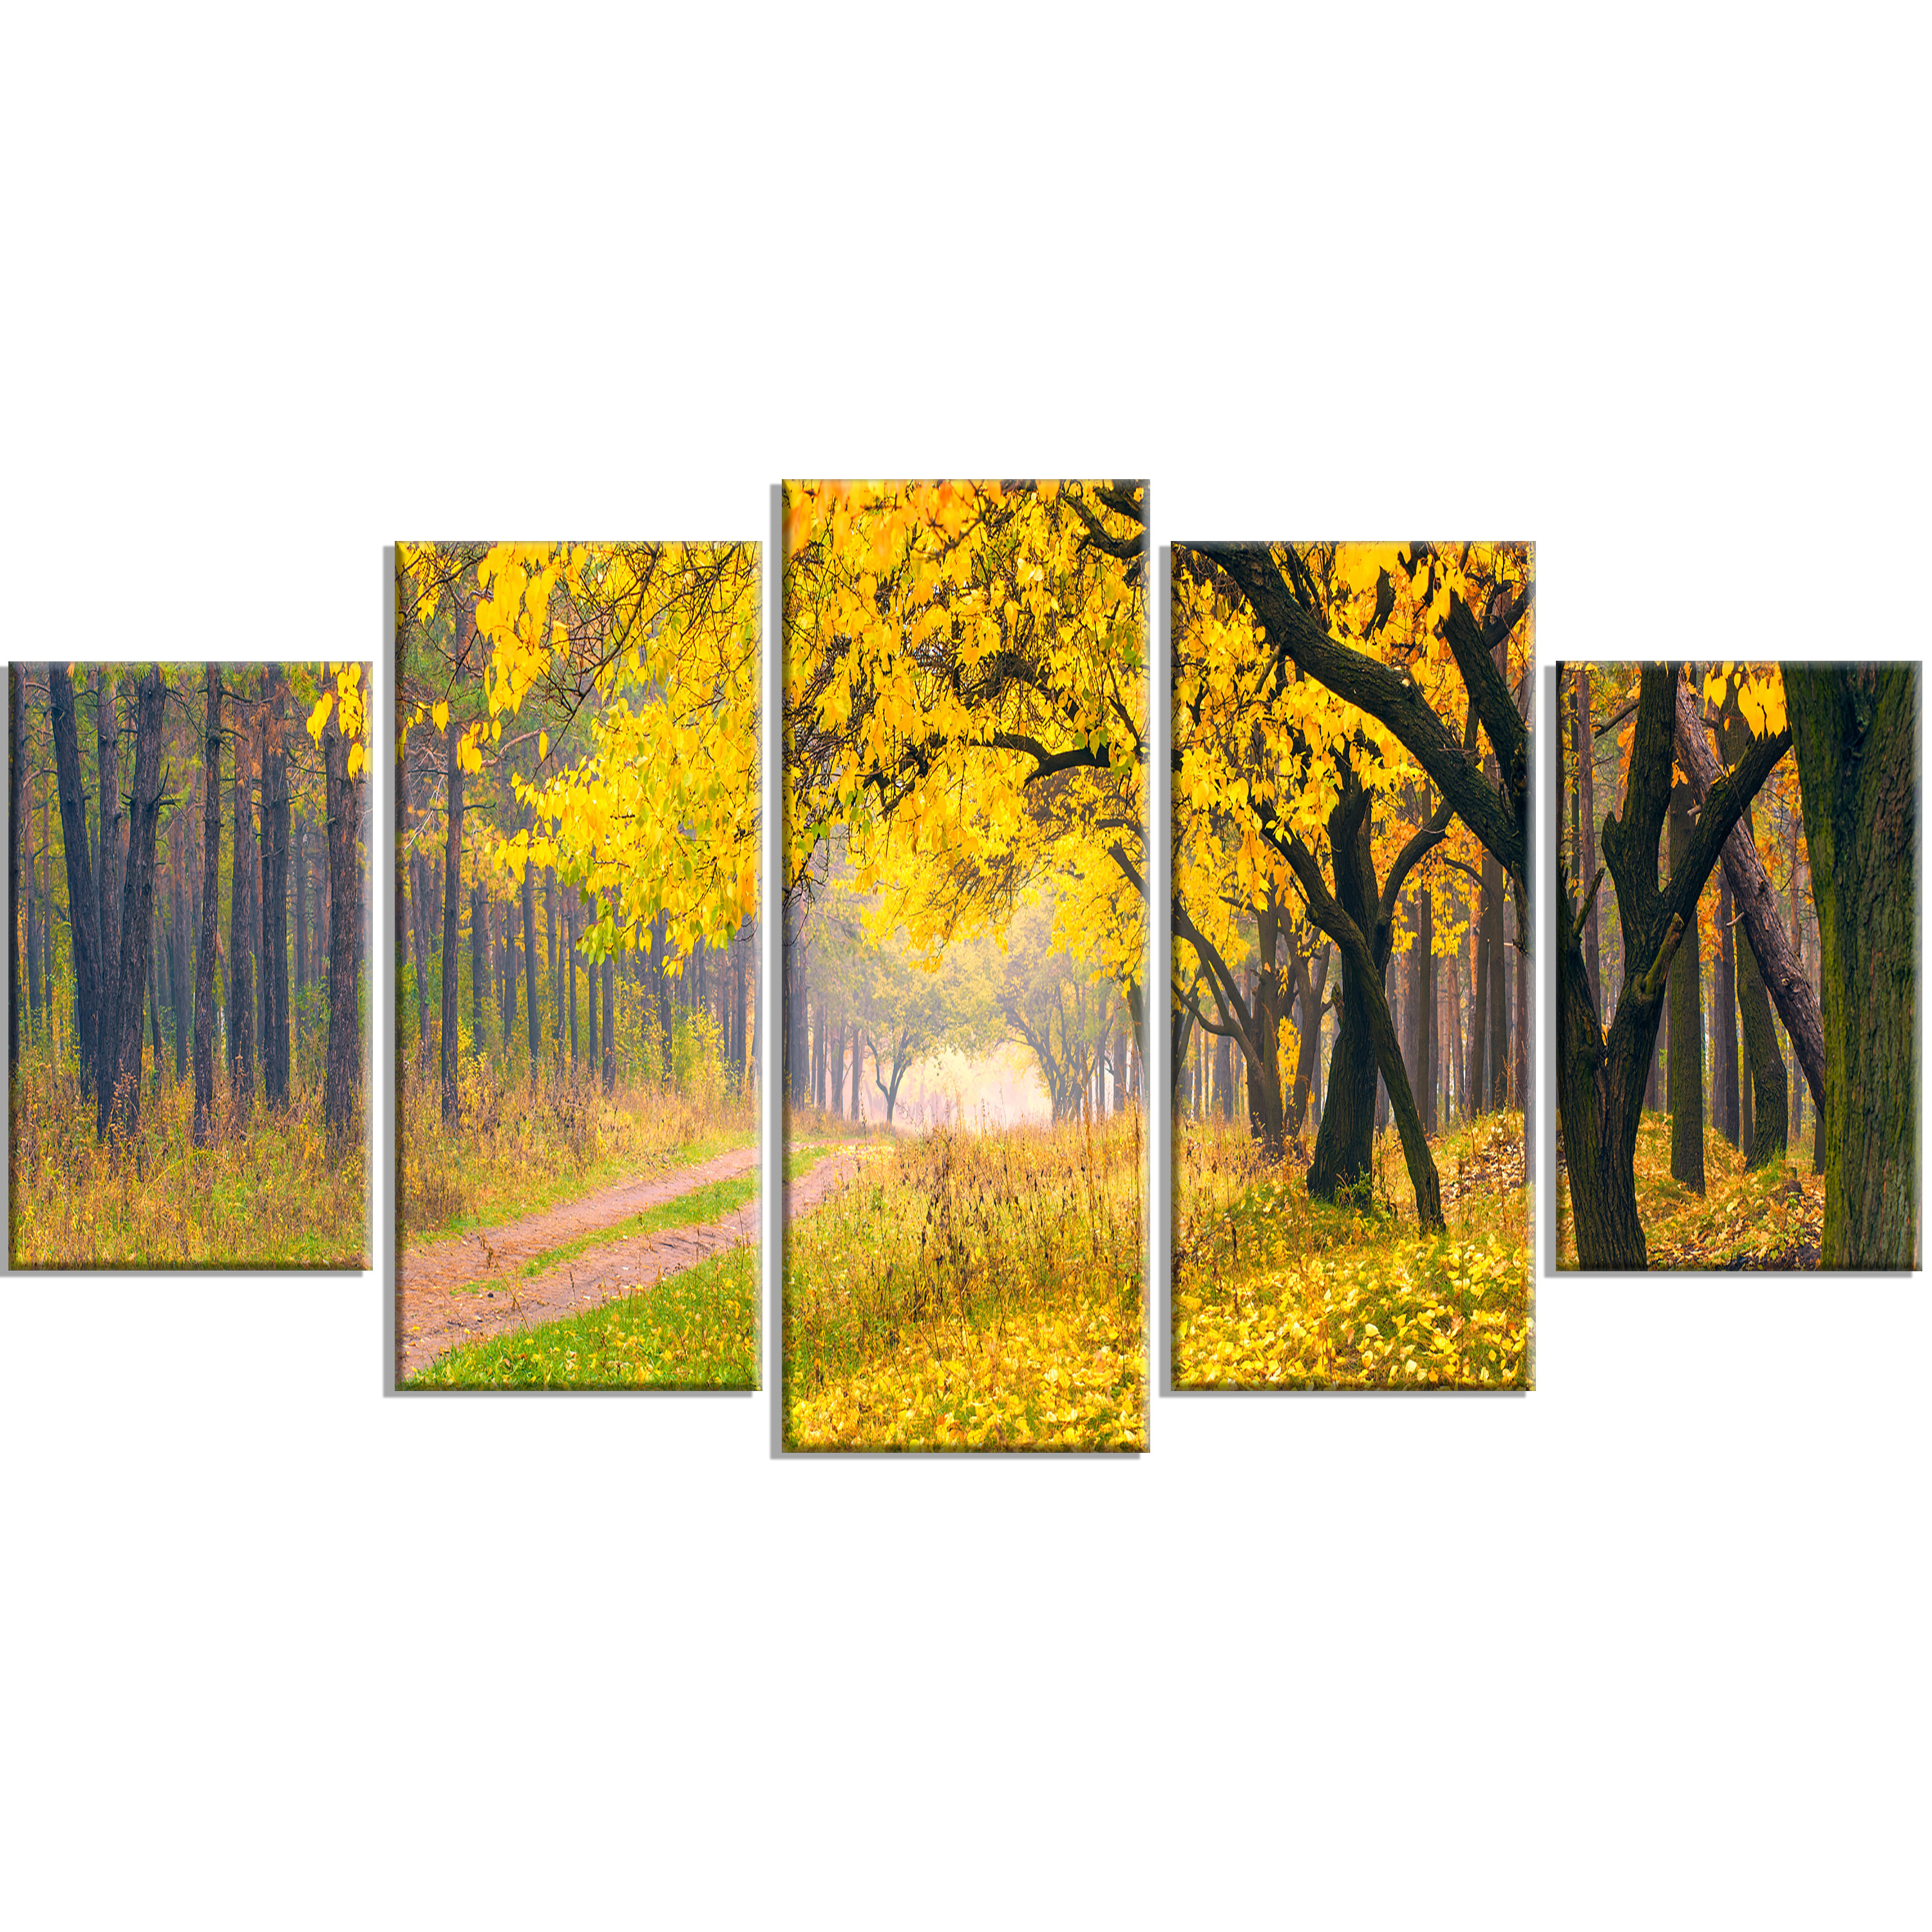 Designart Bright Yellow Autumn Forest 5 Piece Wall Art On Wrapped Canvas Set Wayfair